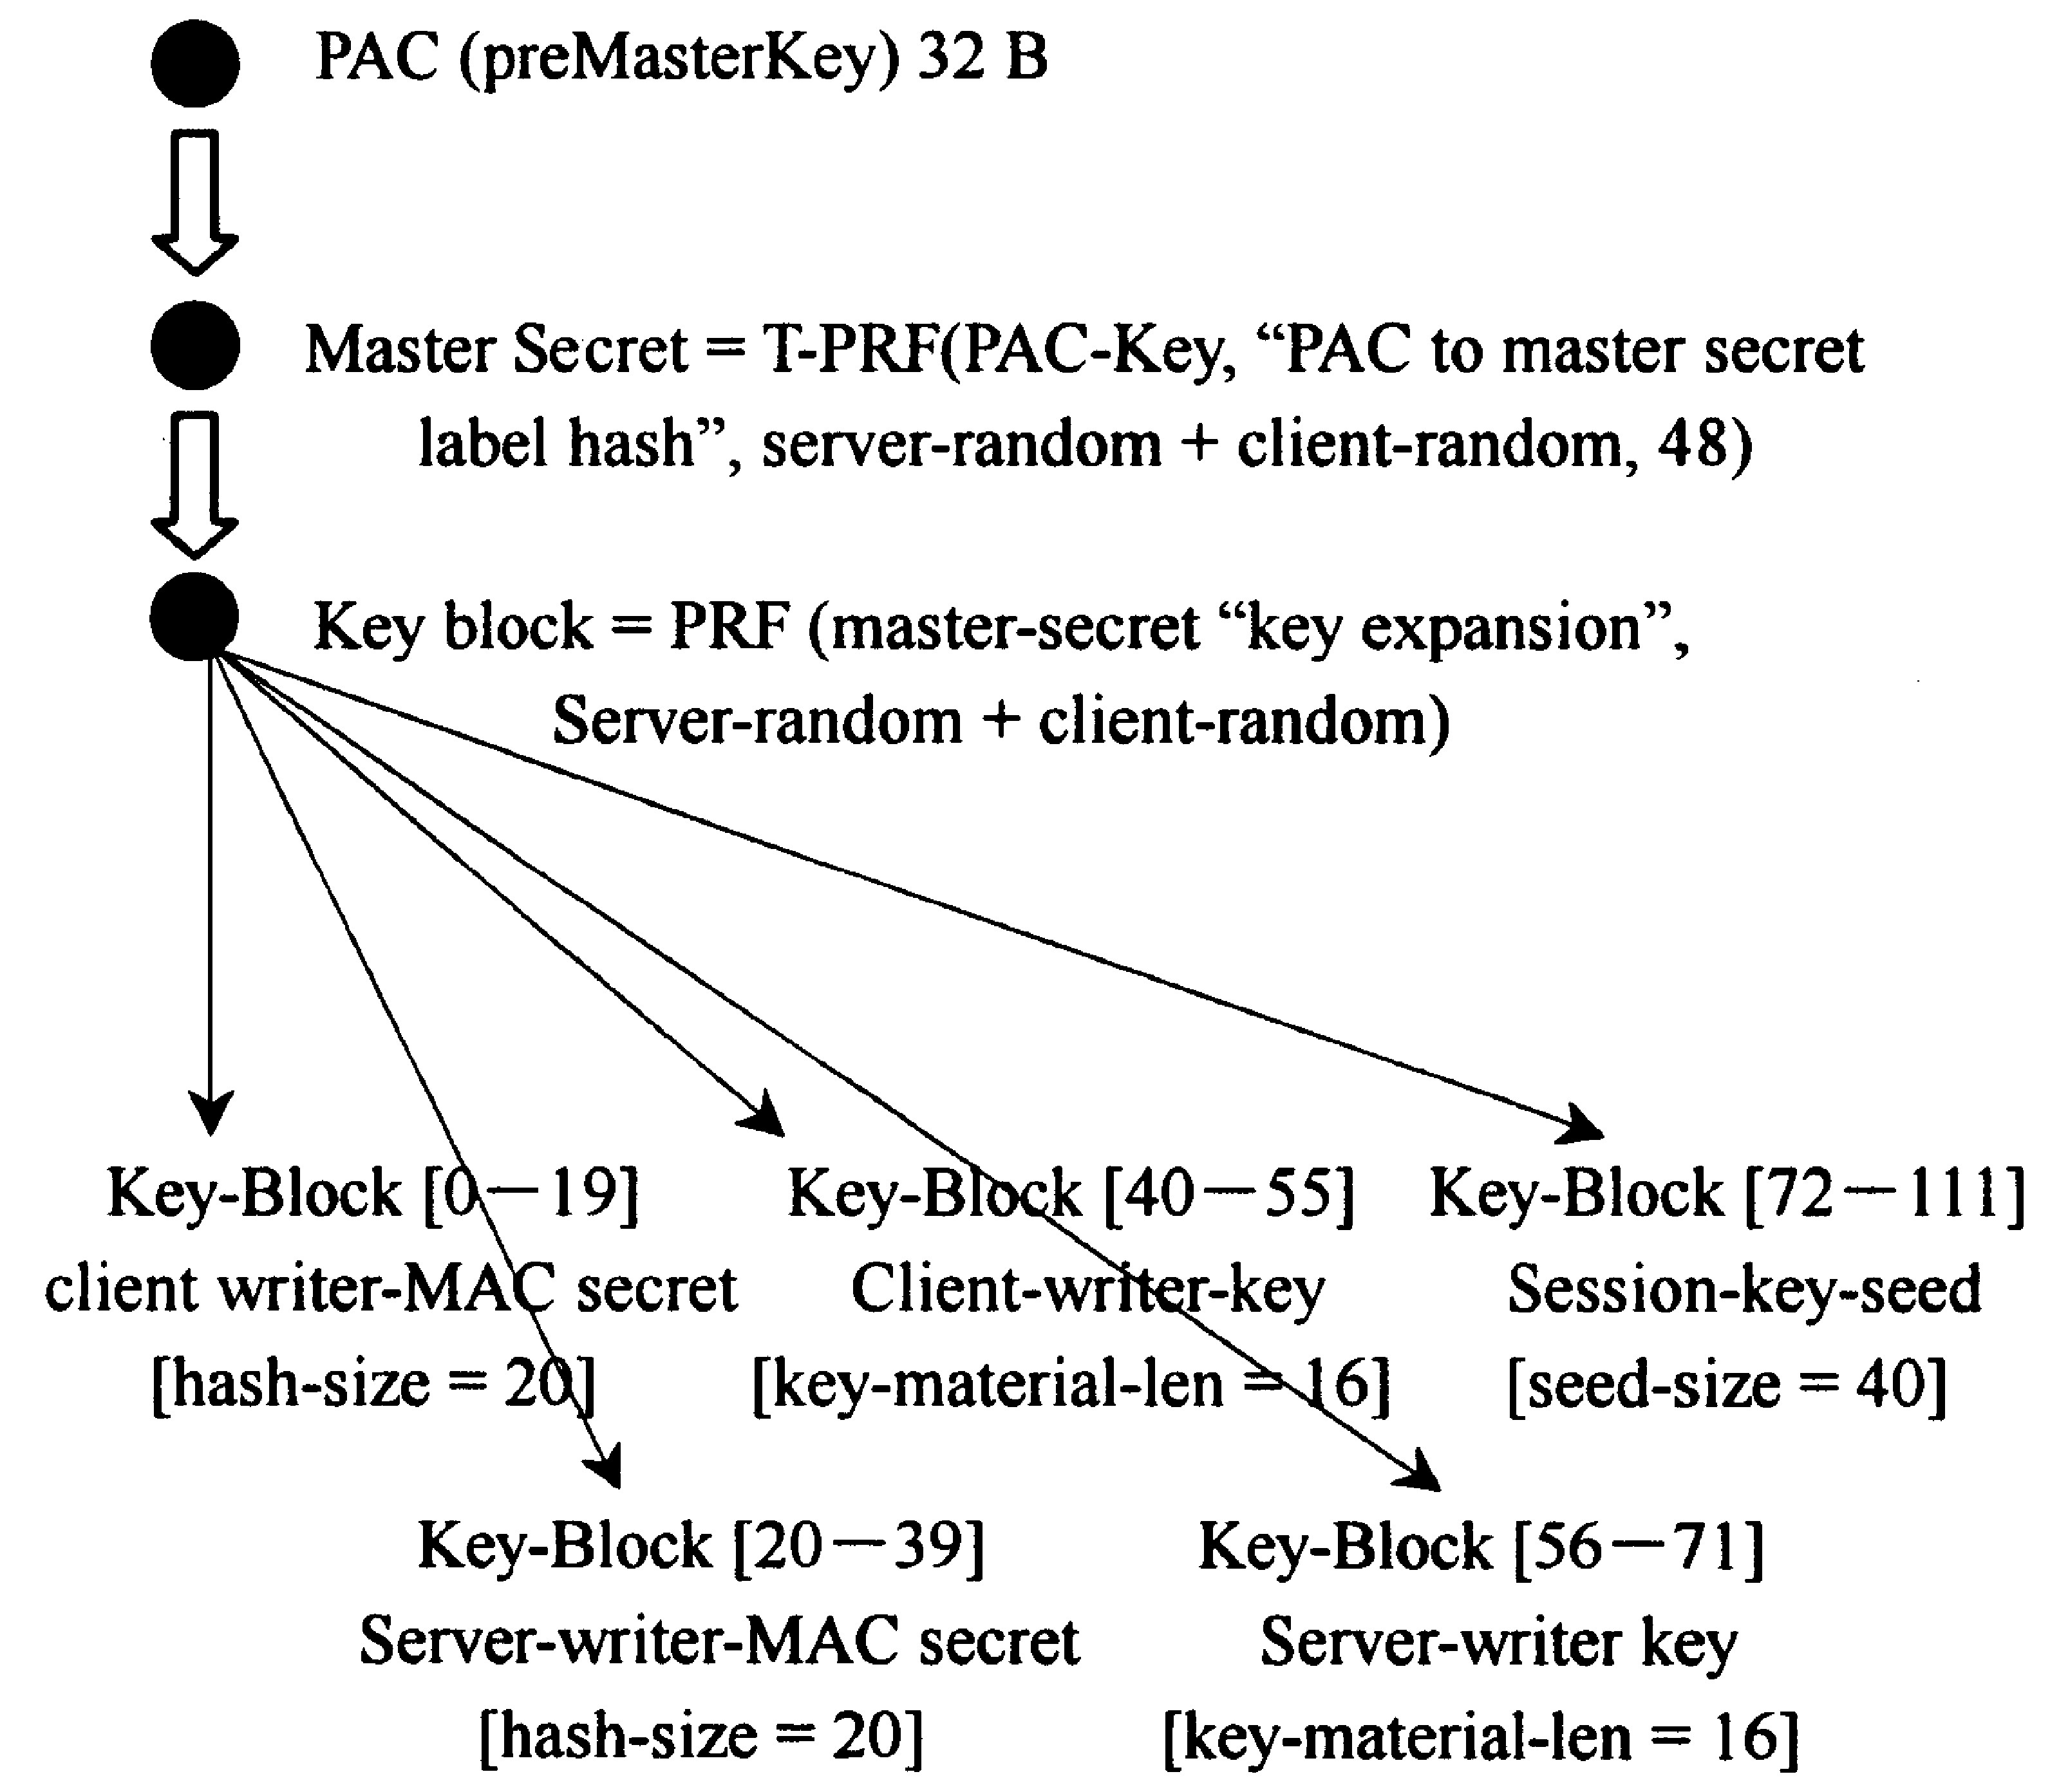 图2 密钥生成材料的密钥分层结构图
Fig.2 The hierarchy of key material